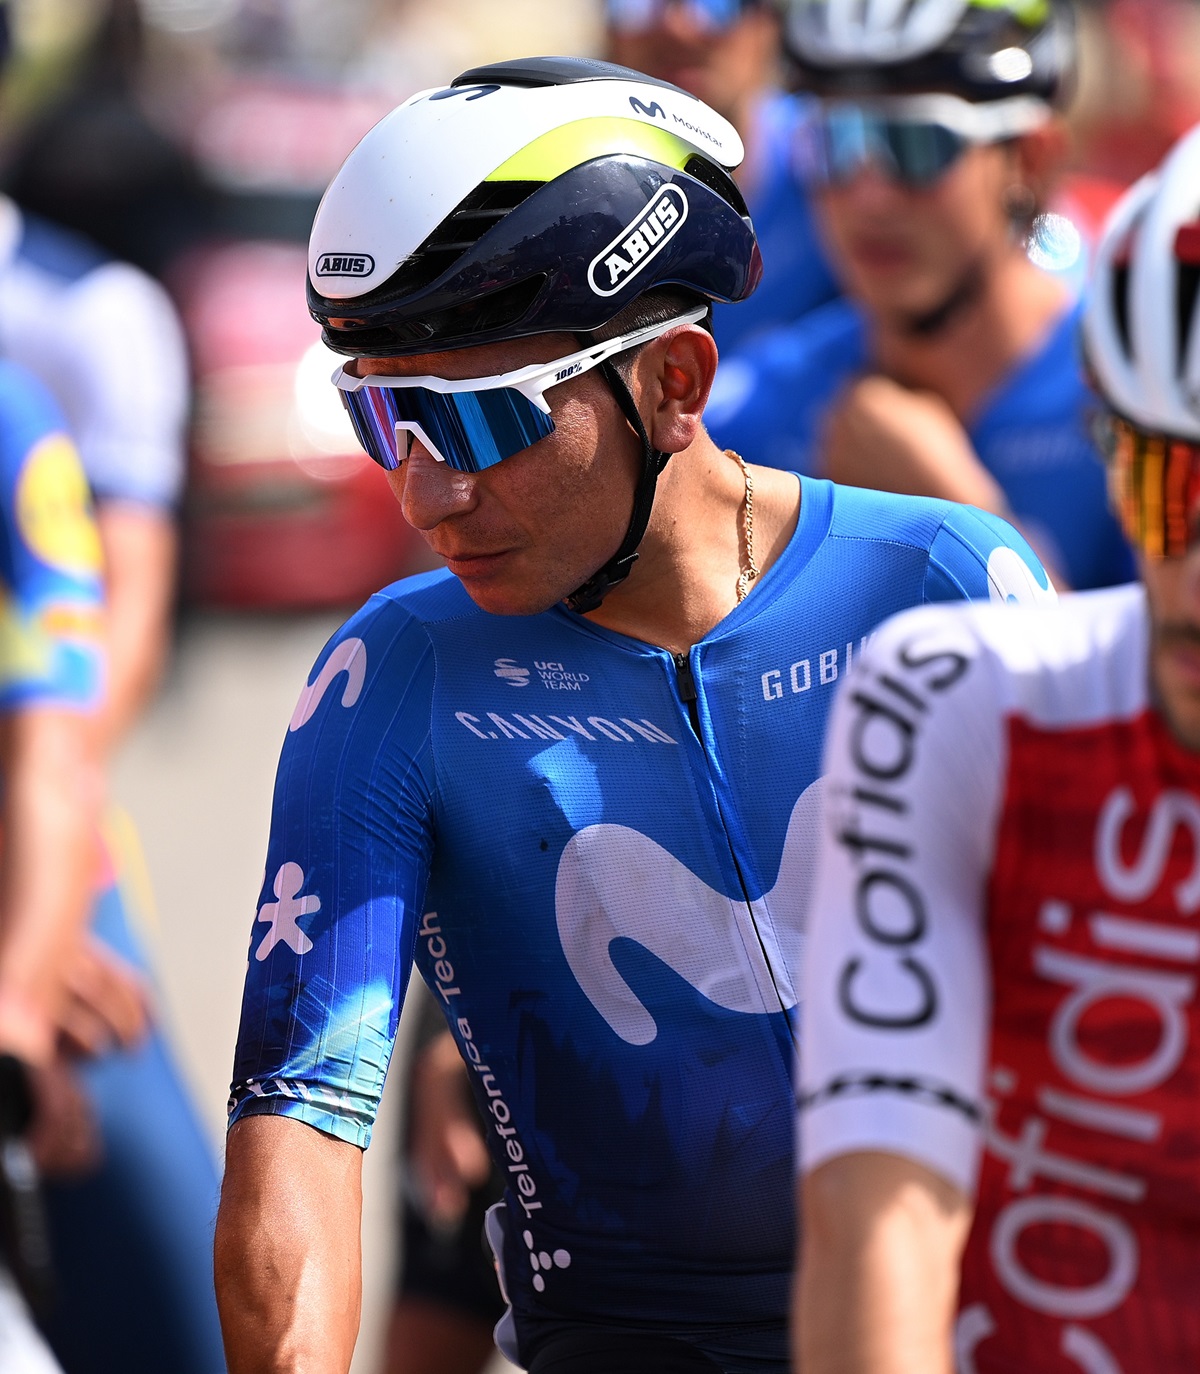 Movistar espera a Nairo Quintana para el Giro de Italia.